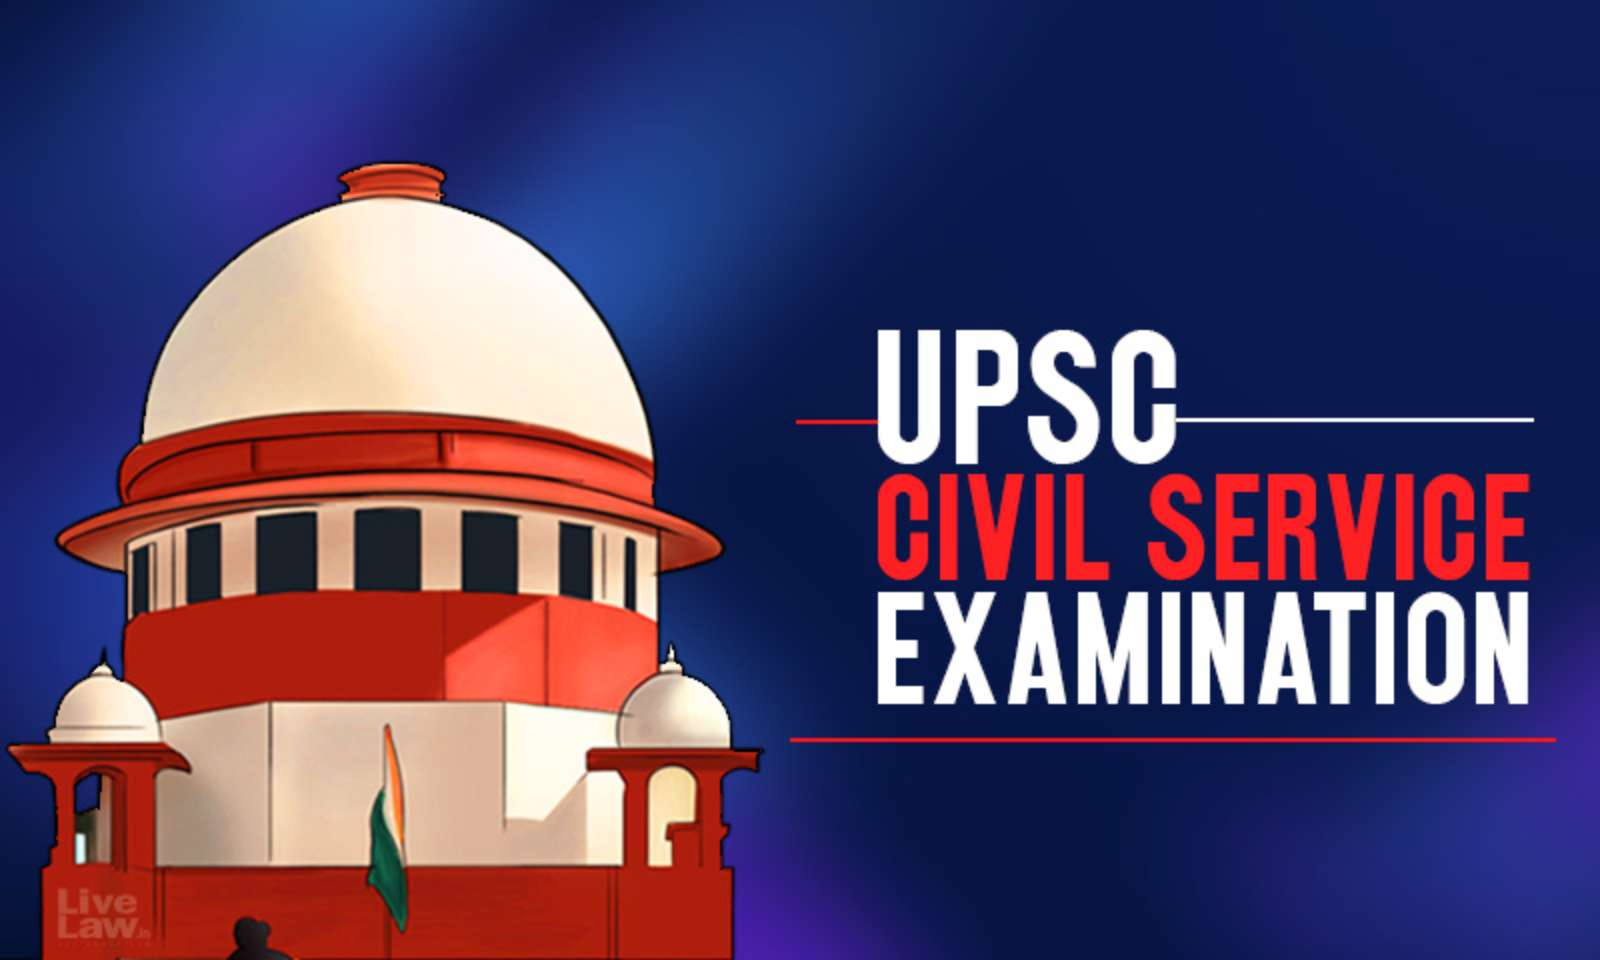 UPSC CSE 2021 NOTIFICATION RELEASED